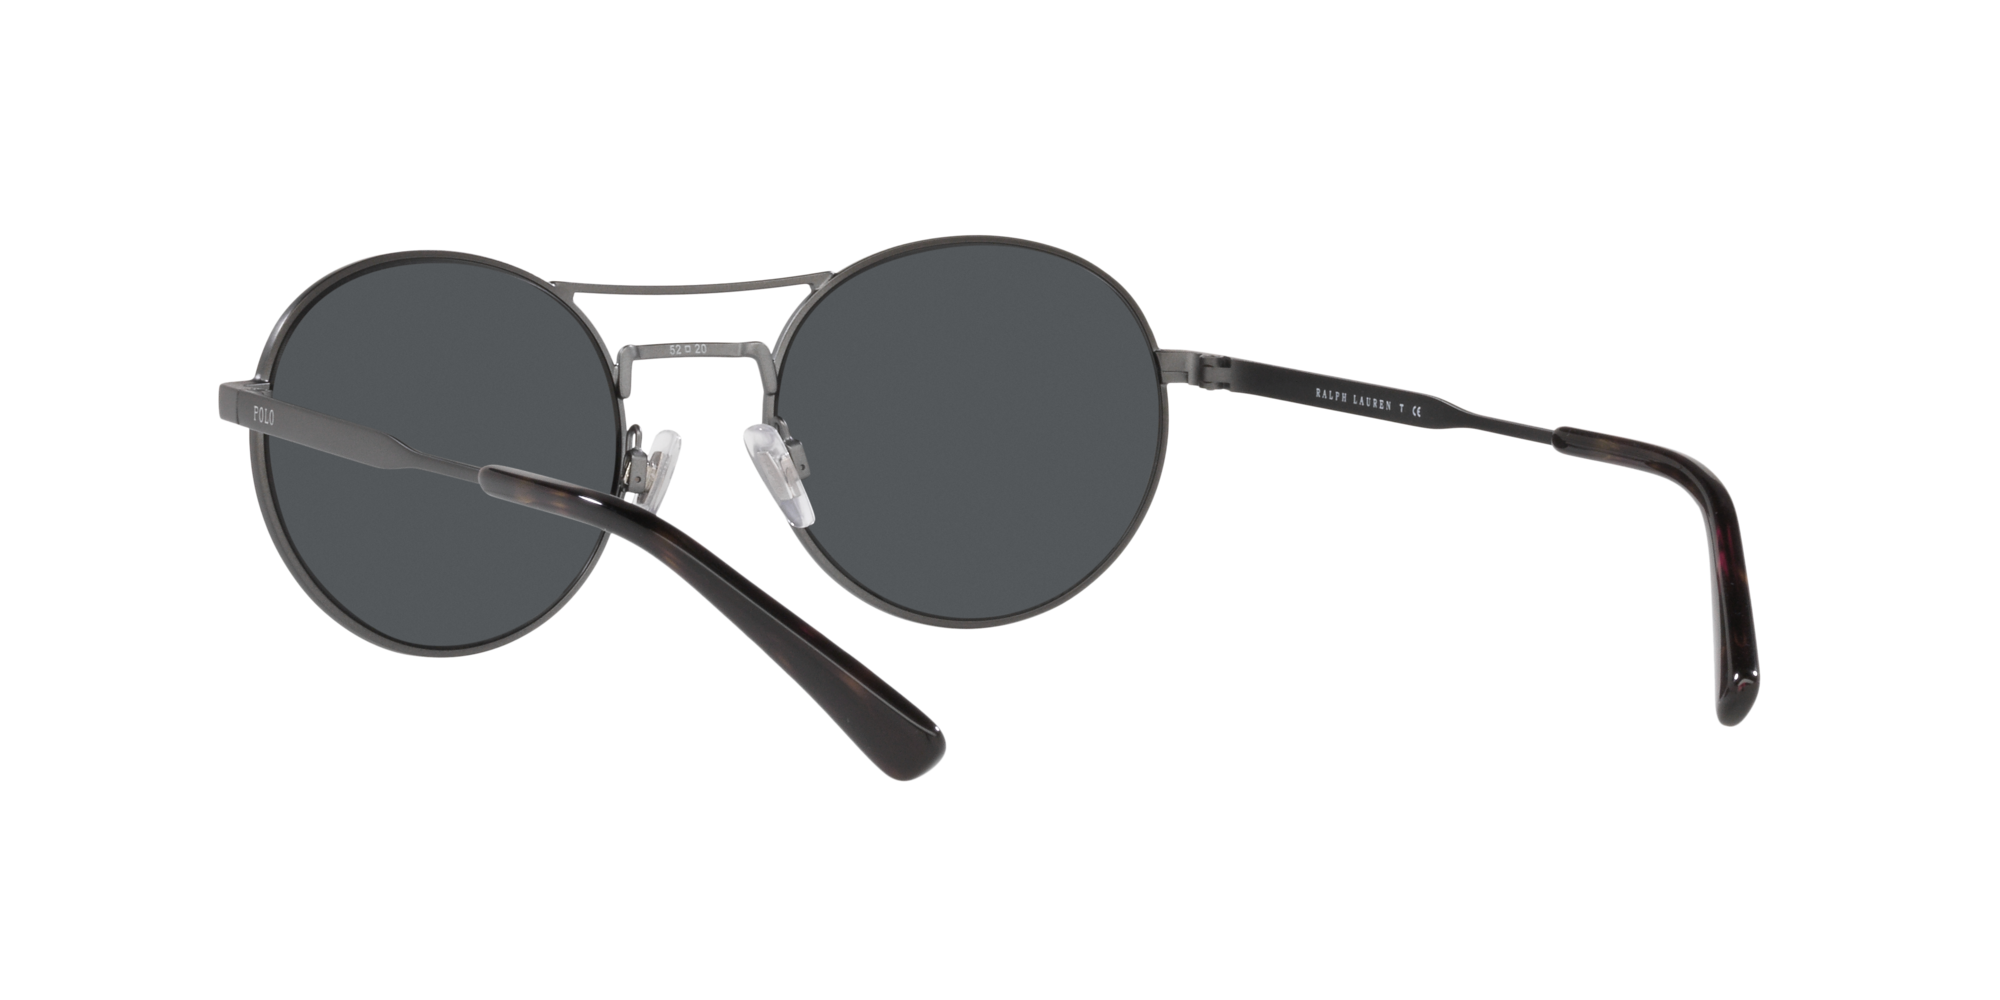 Polo Ralph Lauren Sonnenbrille in gunmetal  PH3142 930787